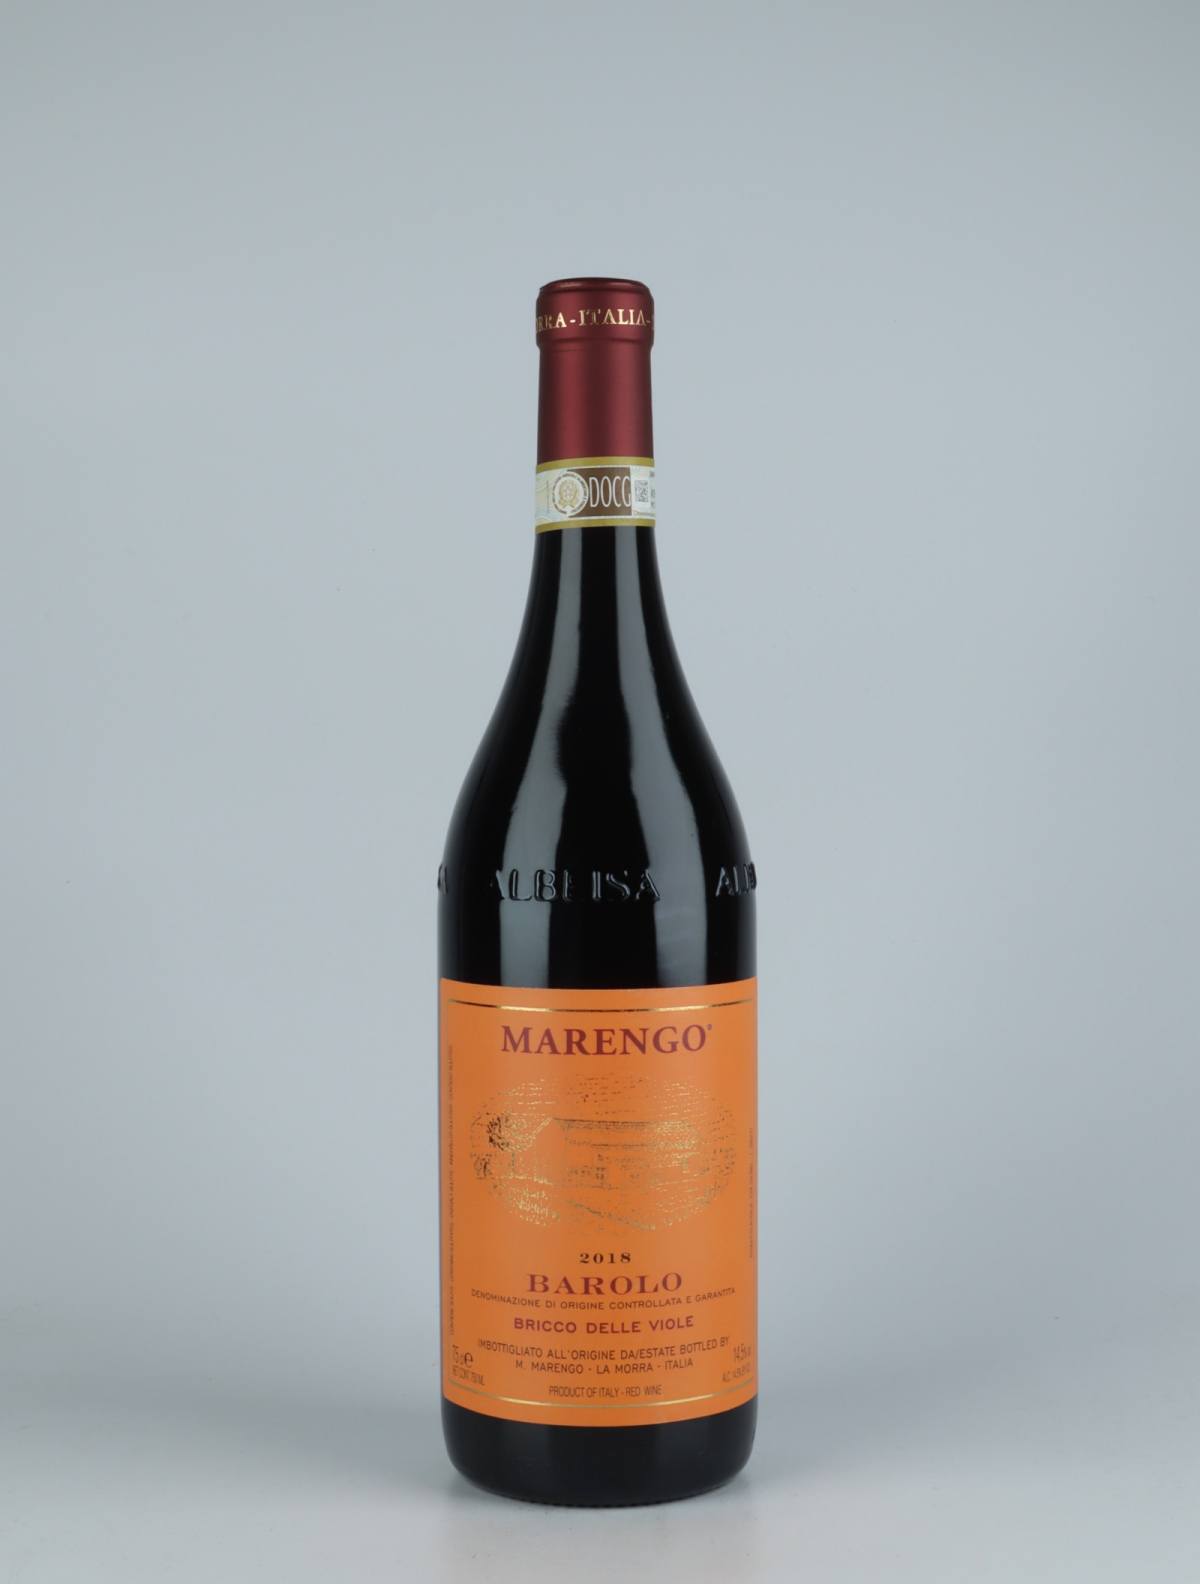 A bottle 2018 Barolo - Bricco delle Viole Red wine from Mario Marengo, Piedmont in Italy